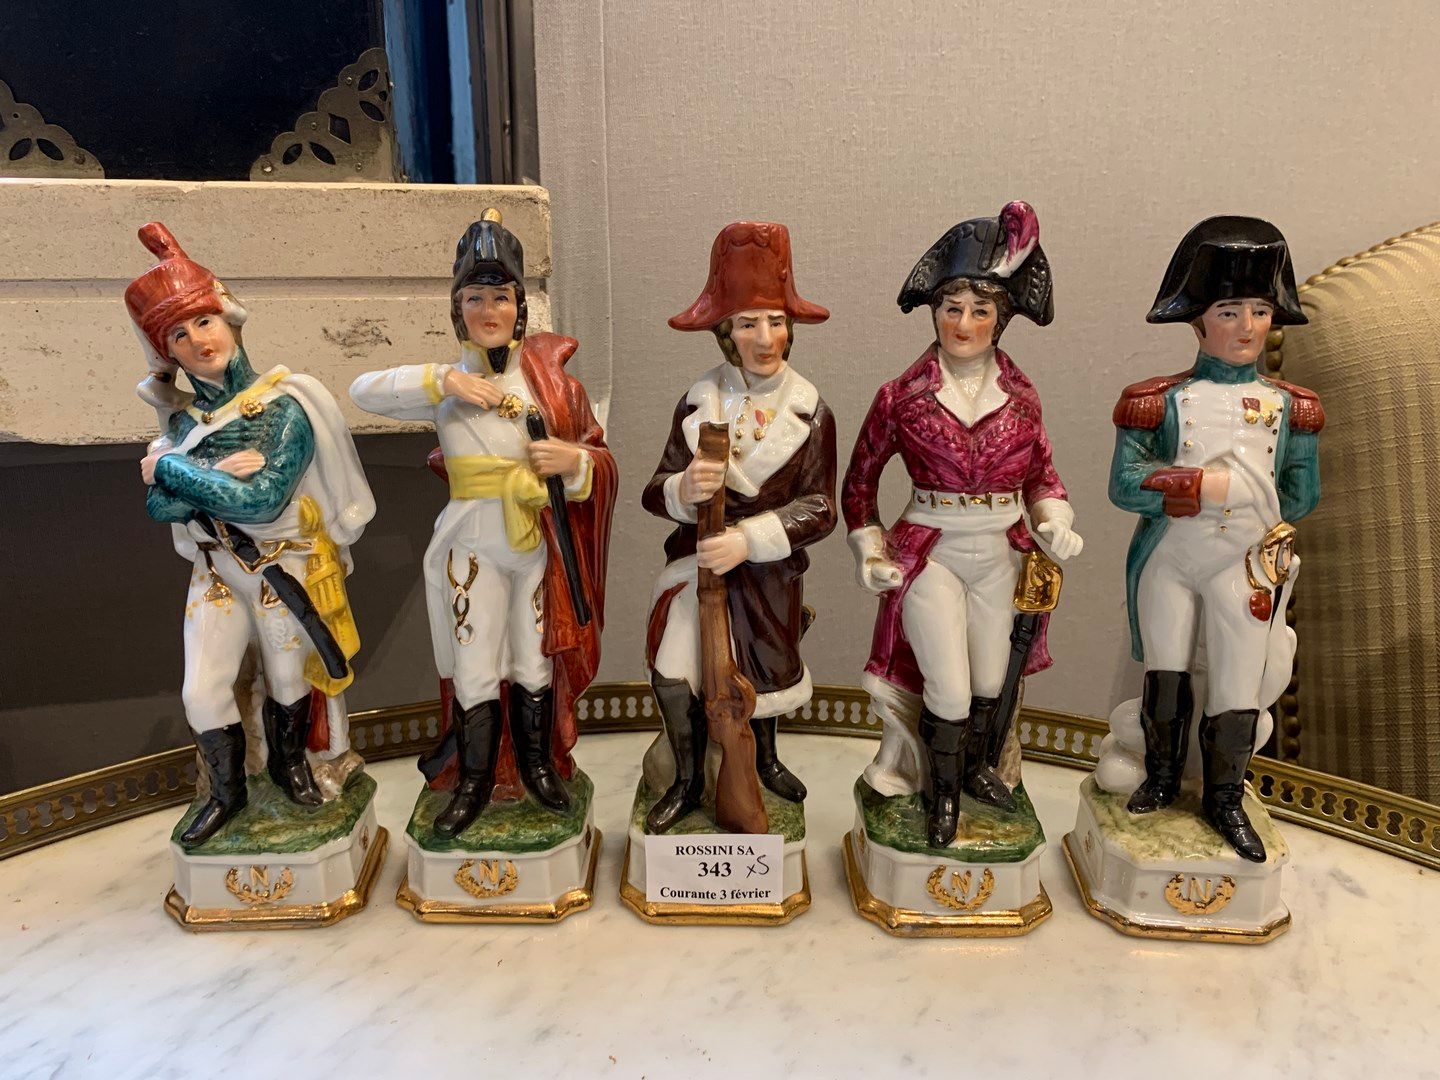 Null 拿破仑和他的将军们的五个瓷器雕像

一些缺口，小型修复